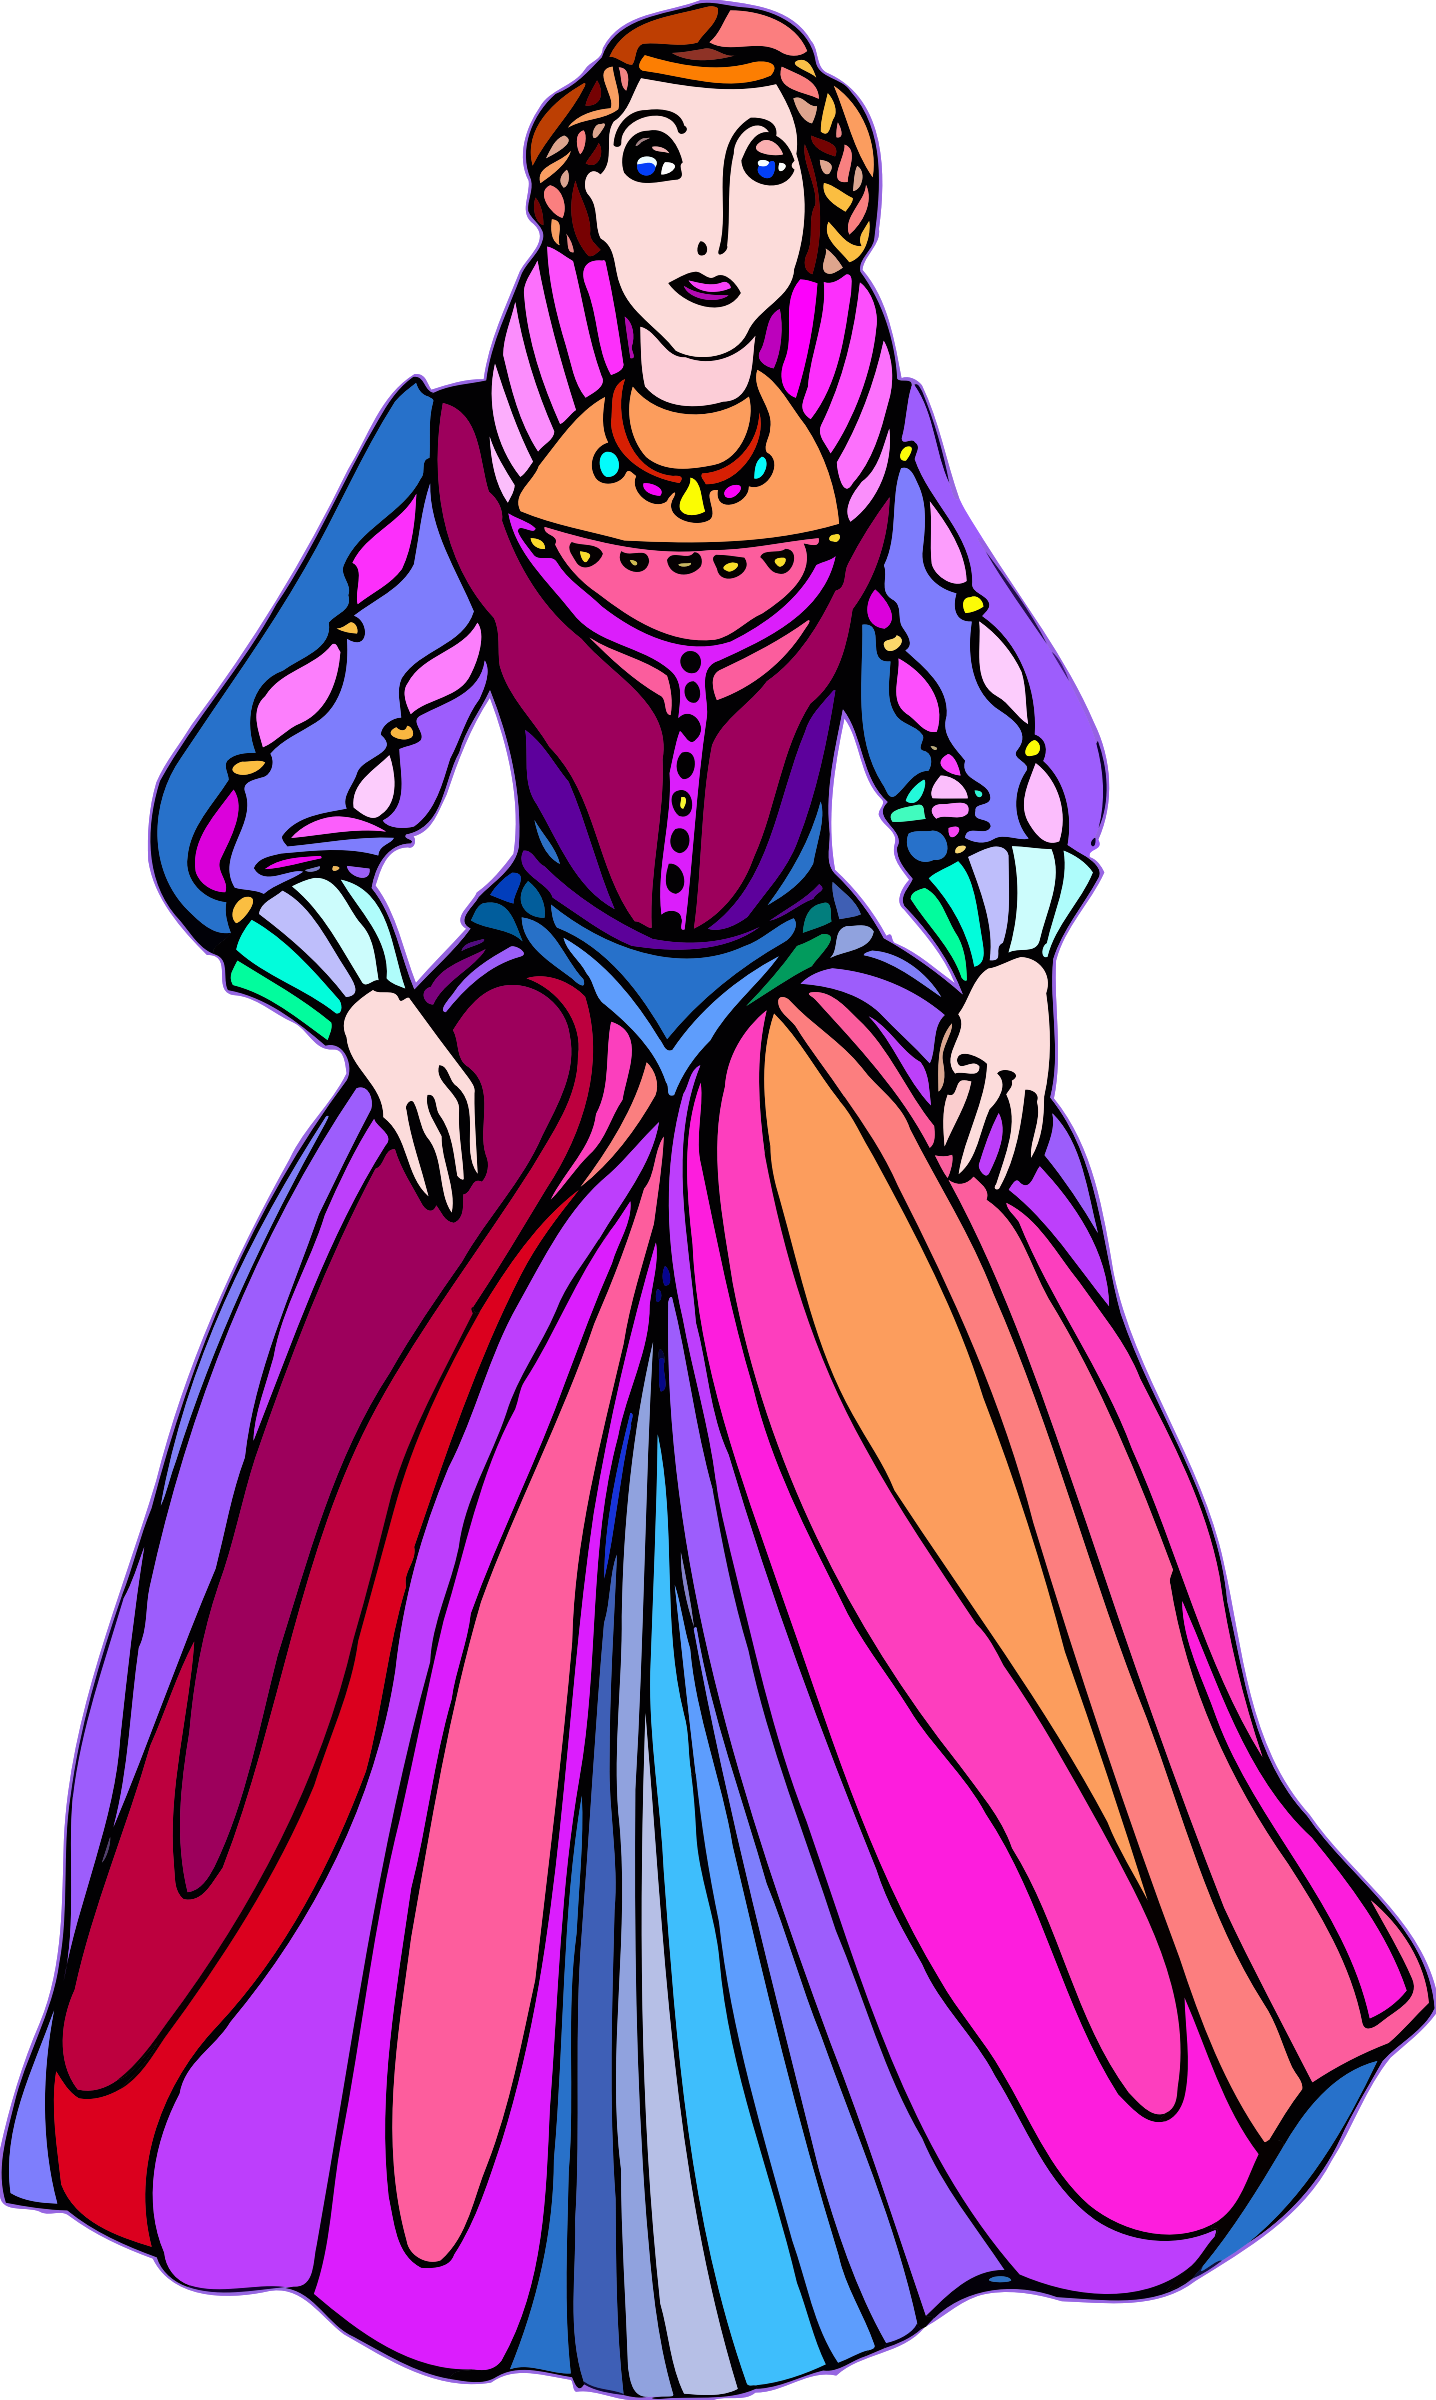 Colorful Victorian Era Dress Illustration PNG image